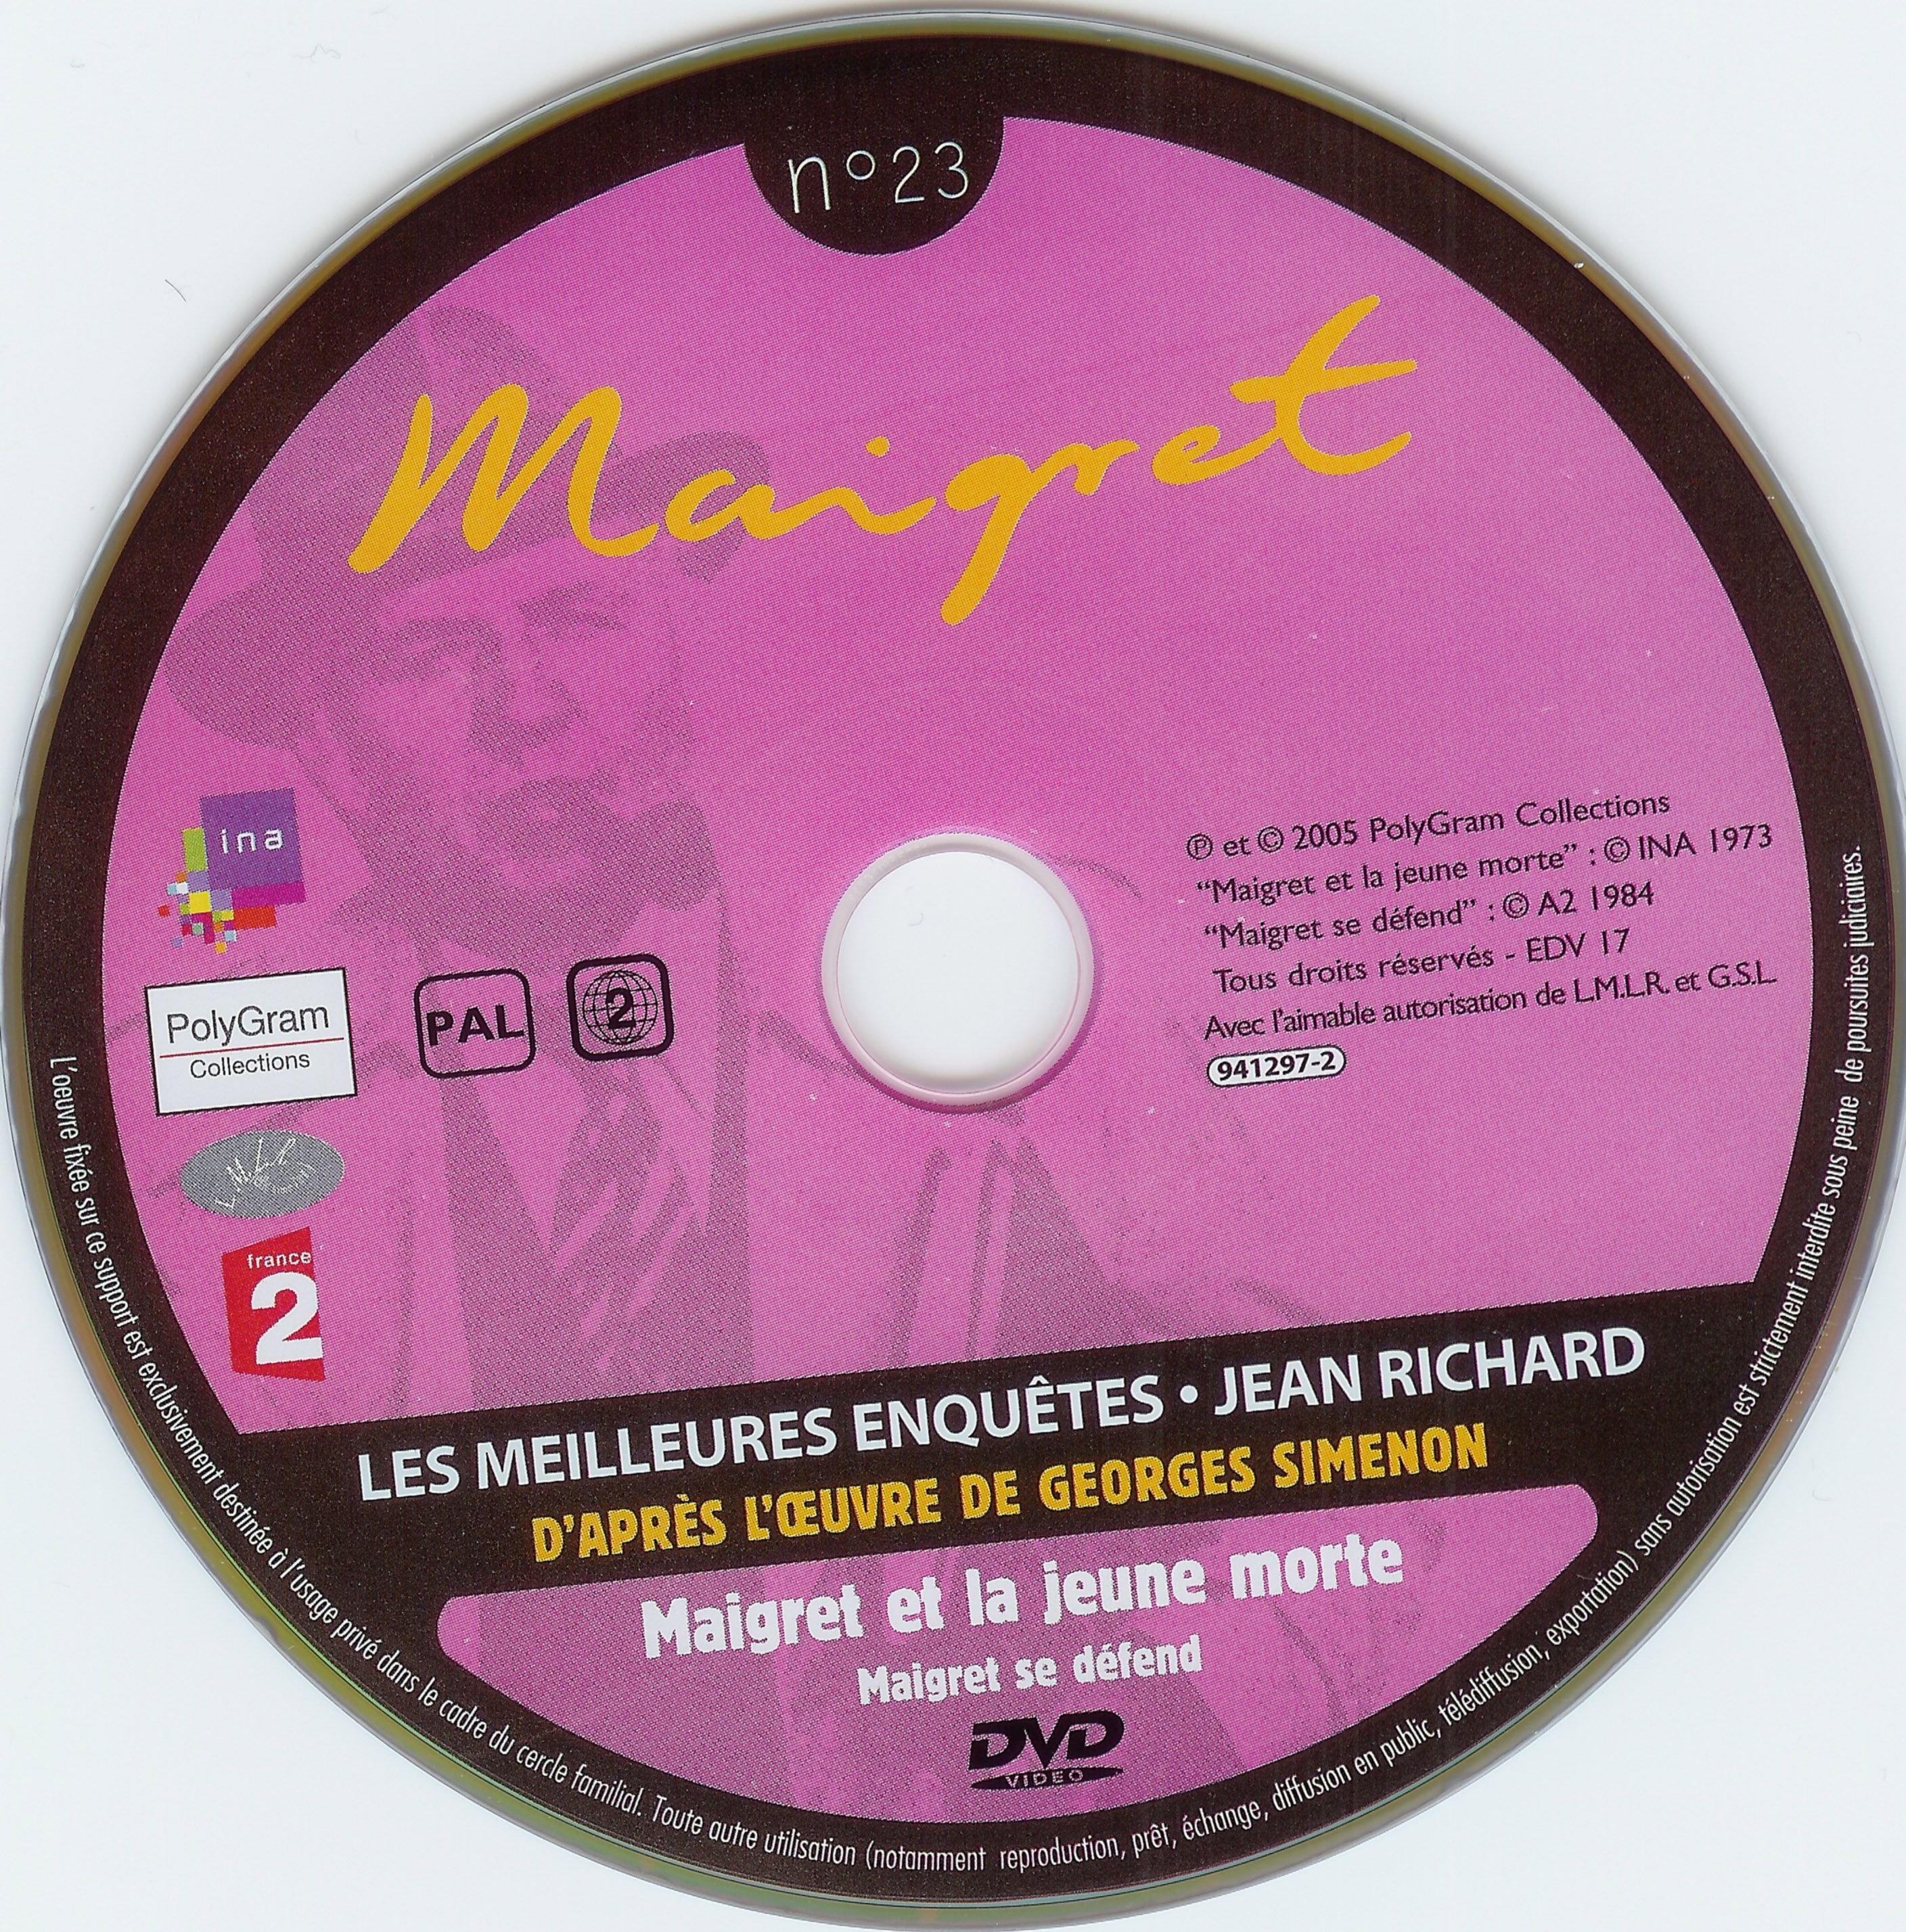 Maigret (Jean Richard) vol 23